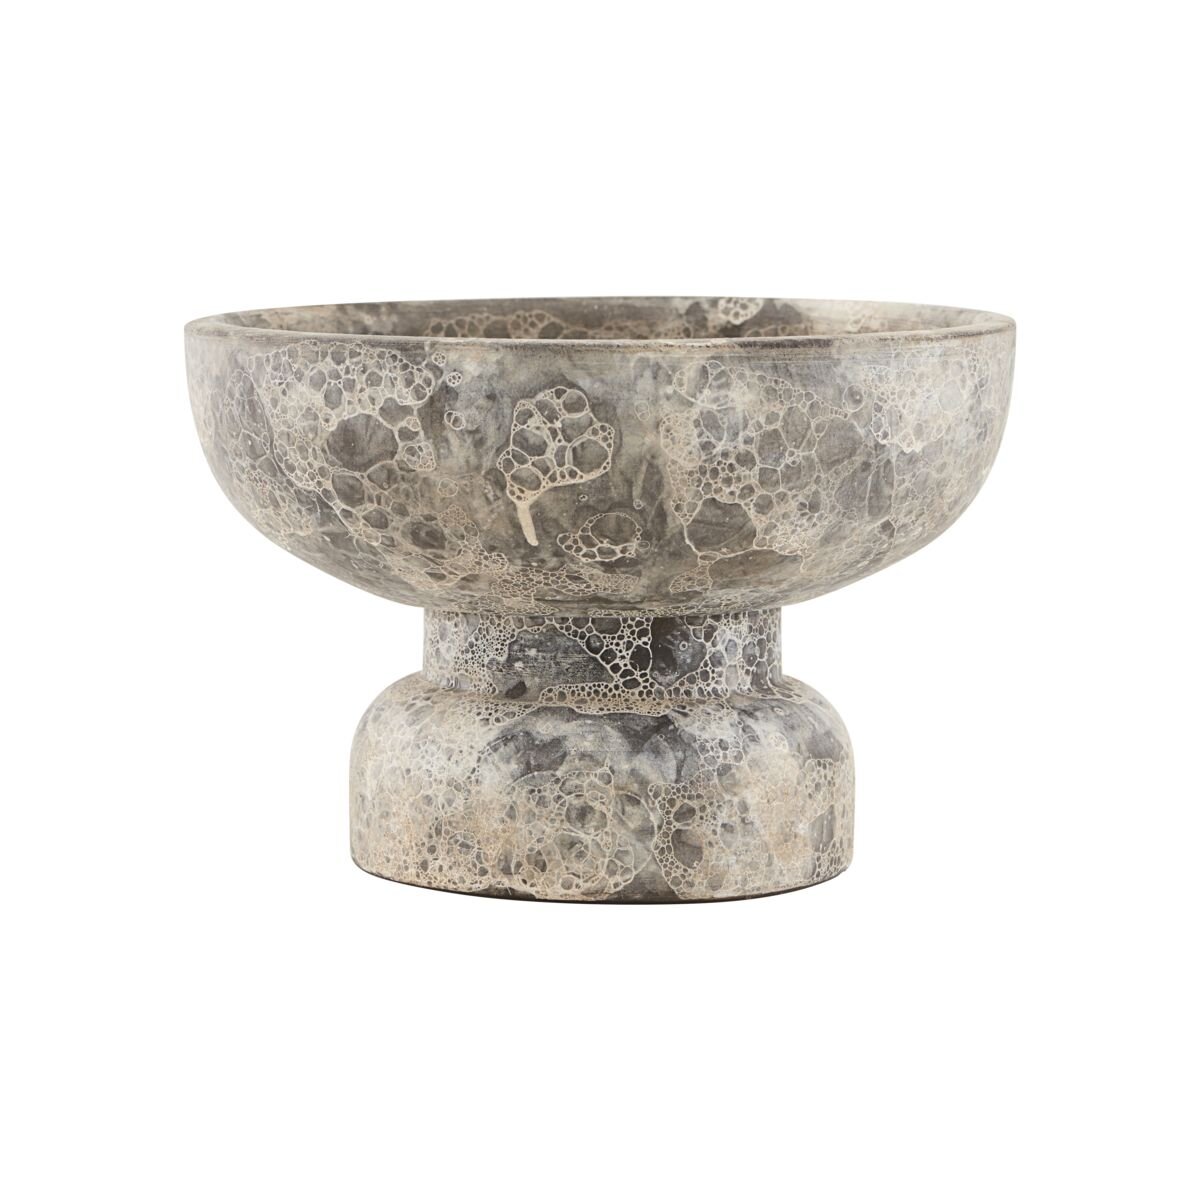 Ancient - Ceramic candle holder